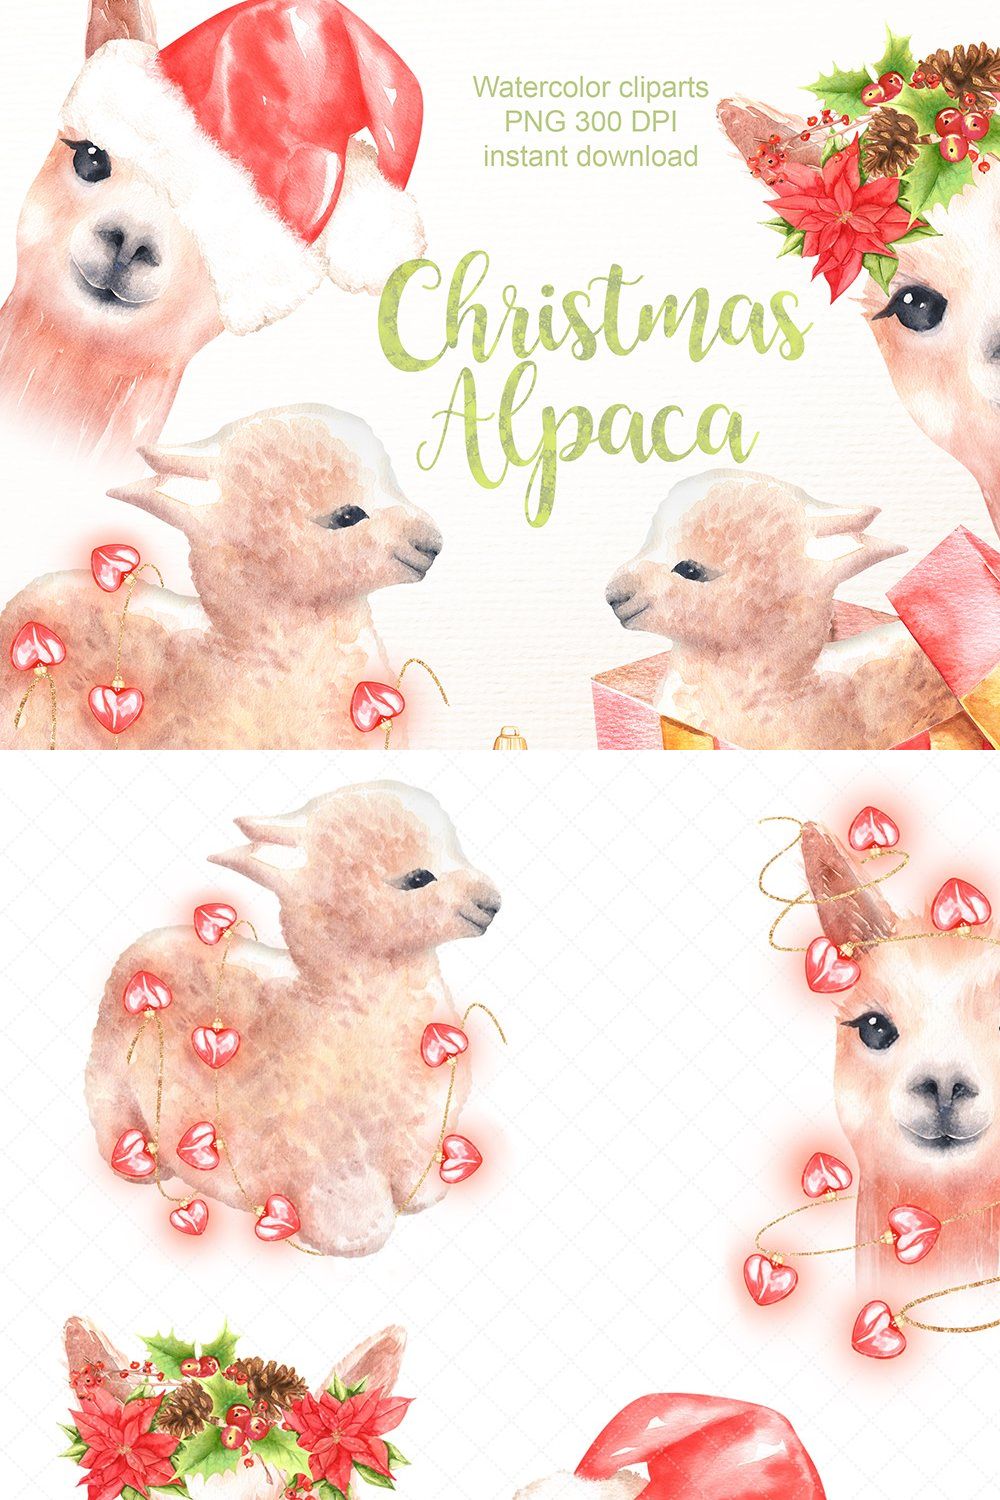 Christmas alpaca clipart. pinterest preview image.